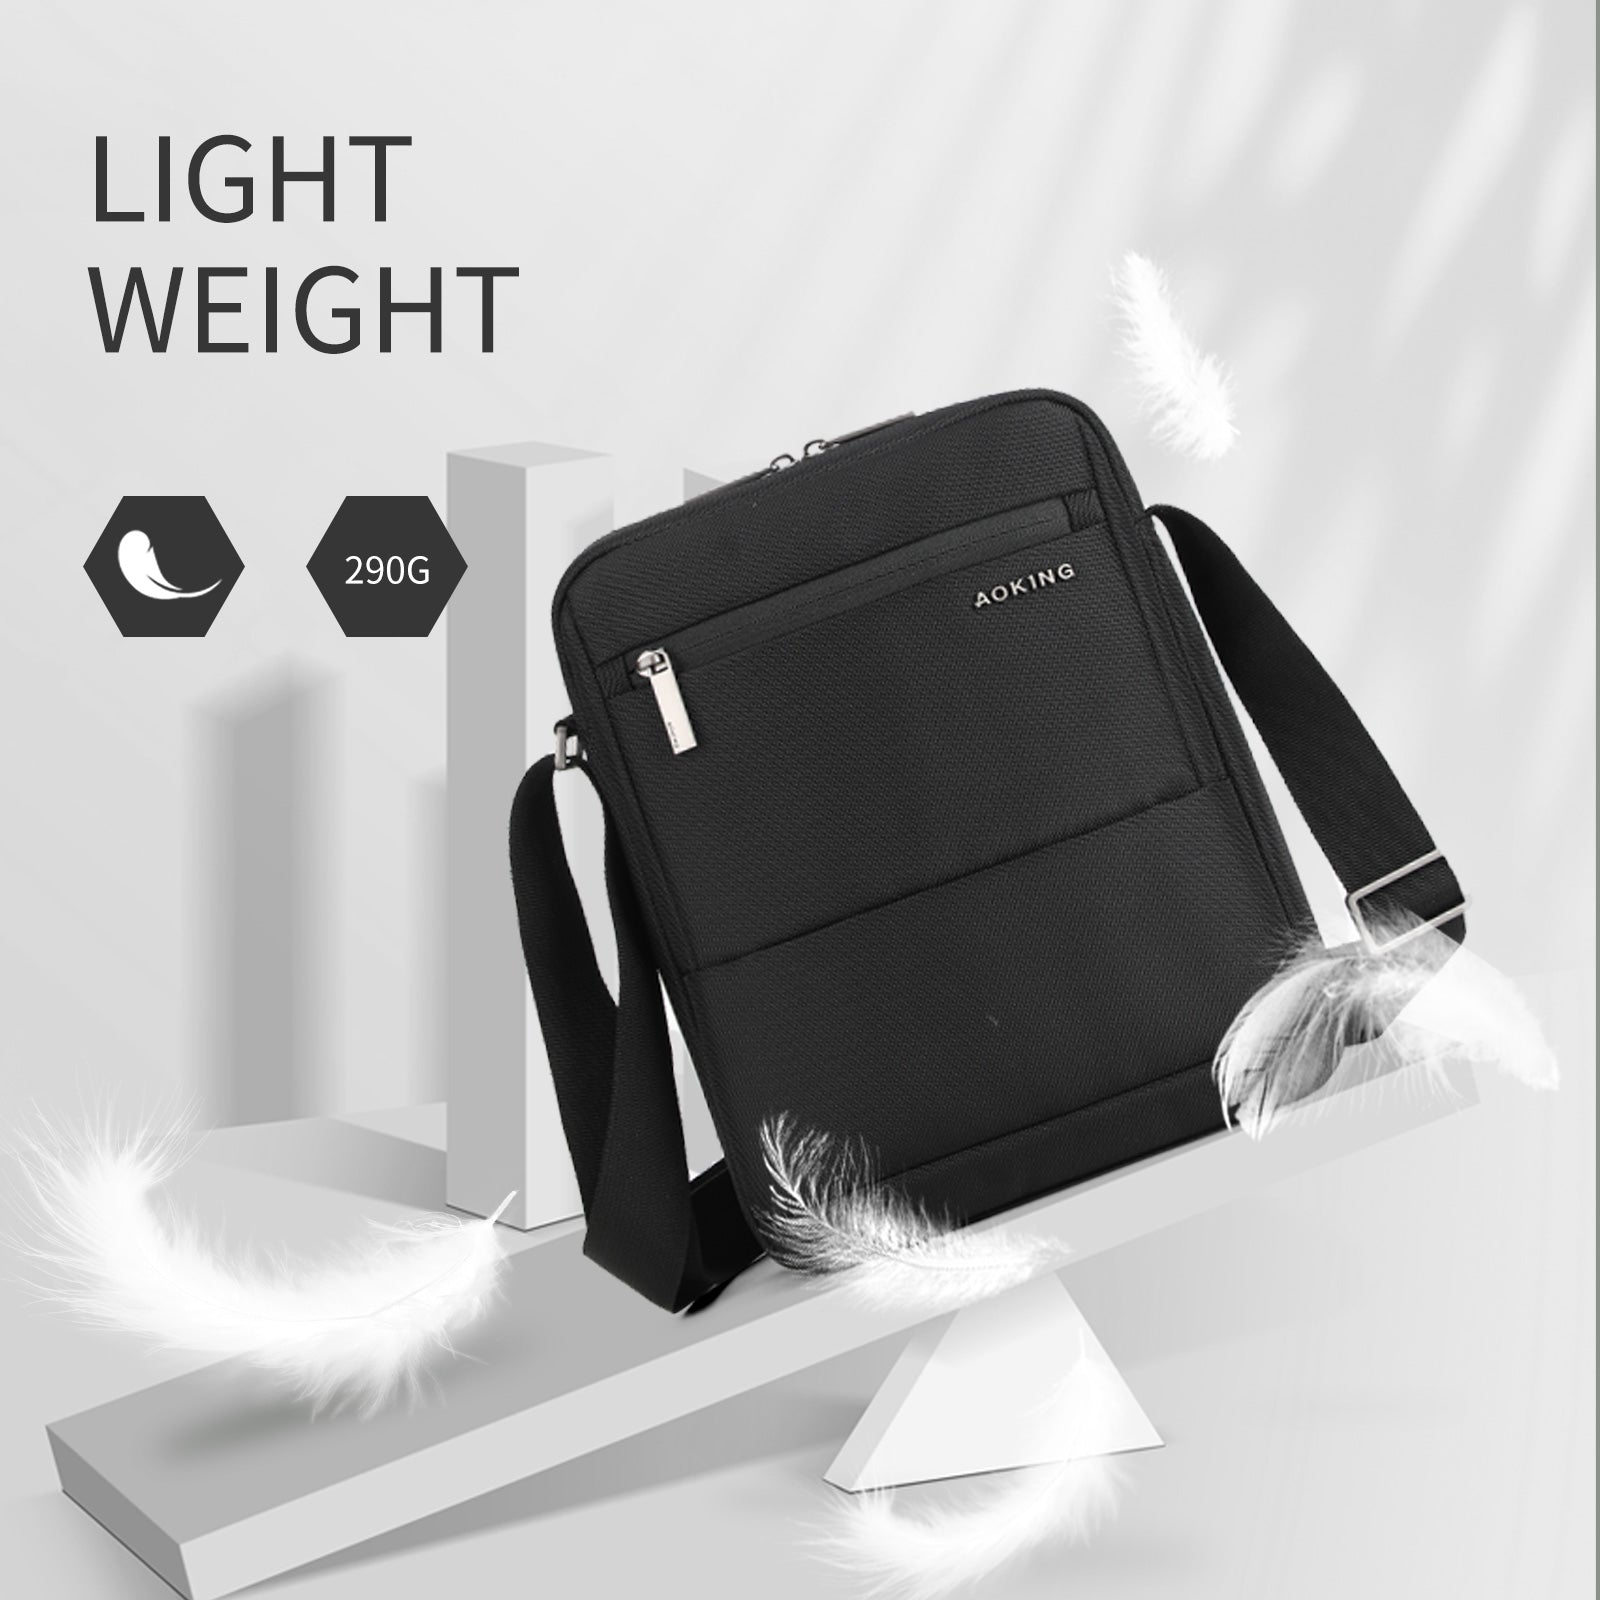 Aoking Durable Large Capacity Cross-Body Shoulder Bag SK2052